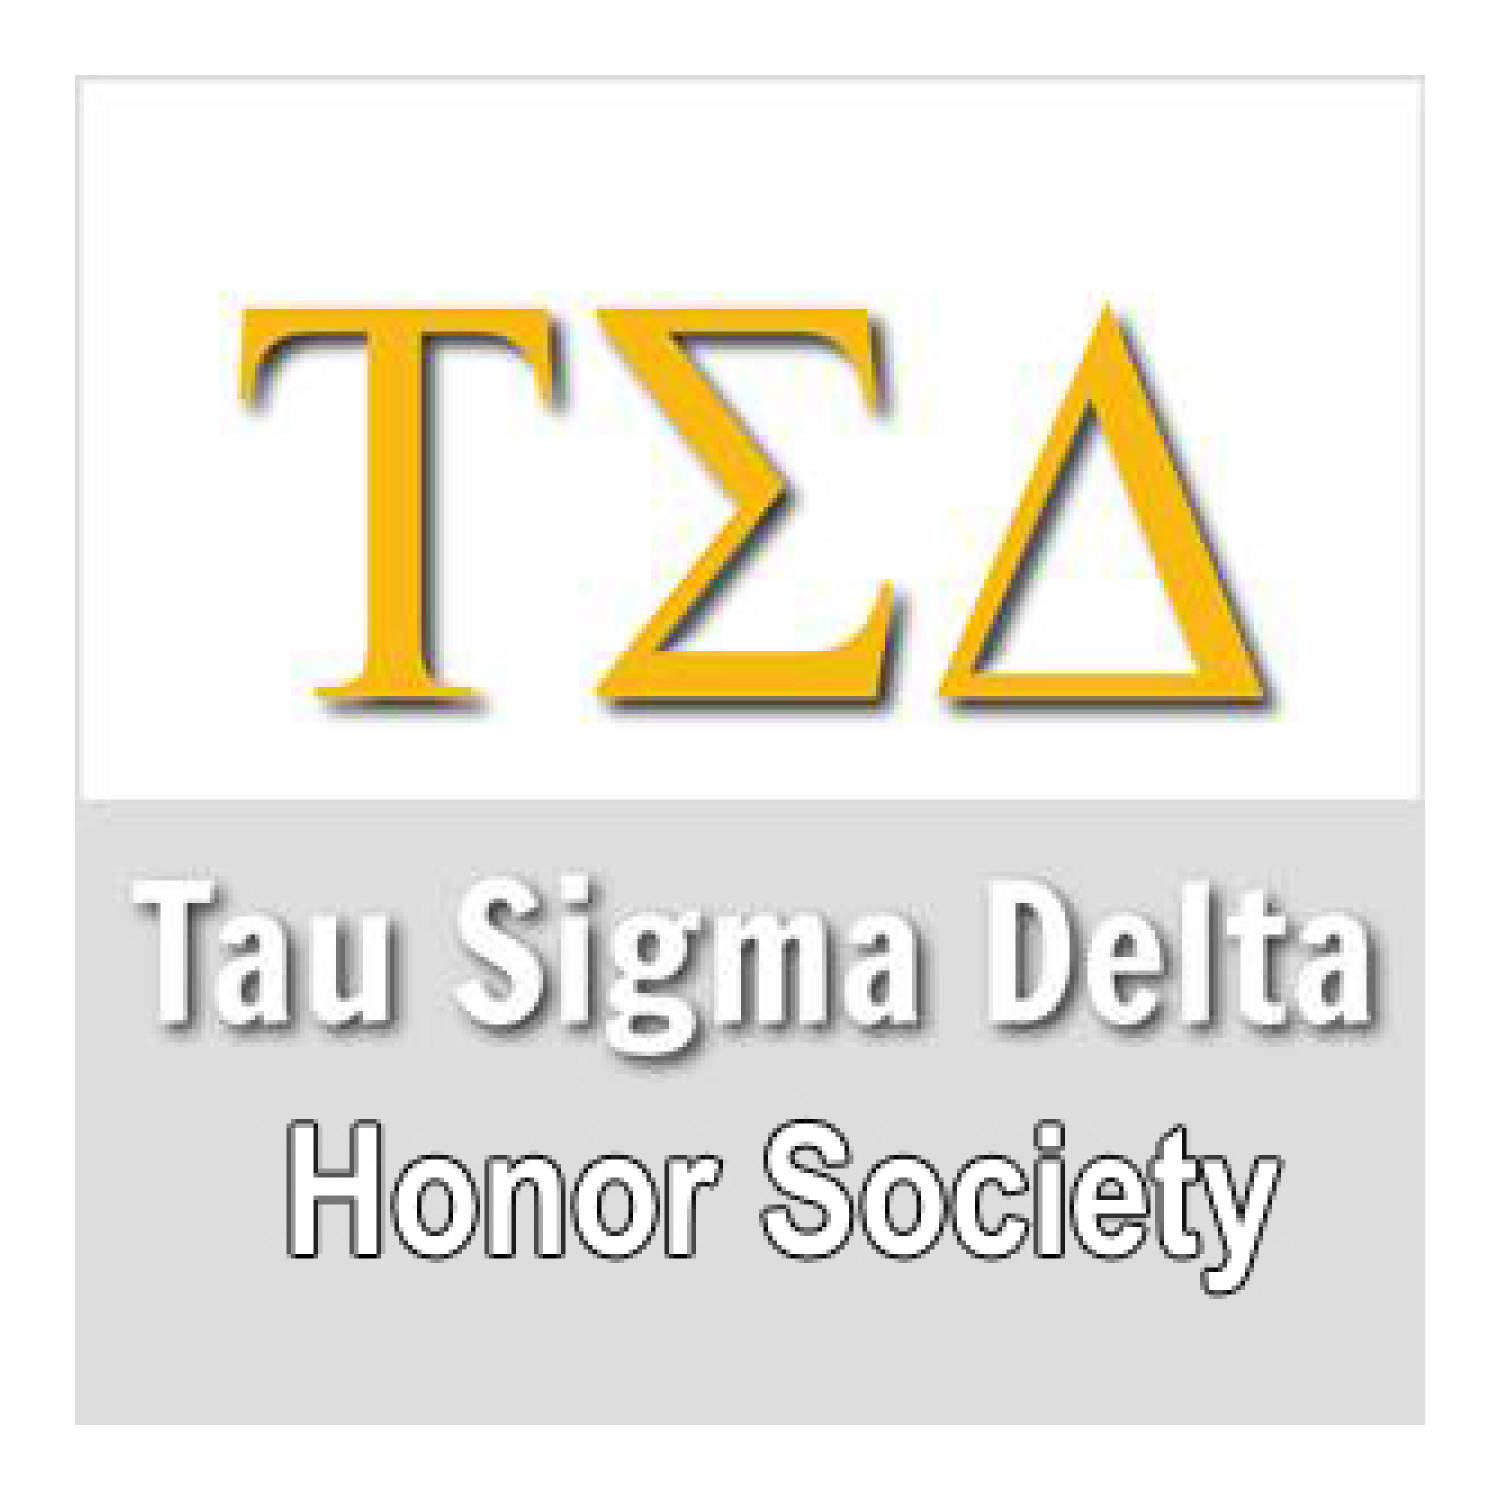 Tau Sigma Delta Honor Society logo